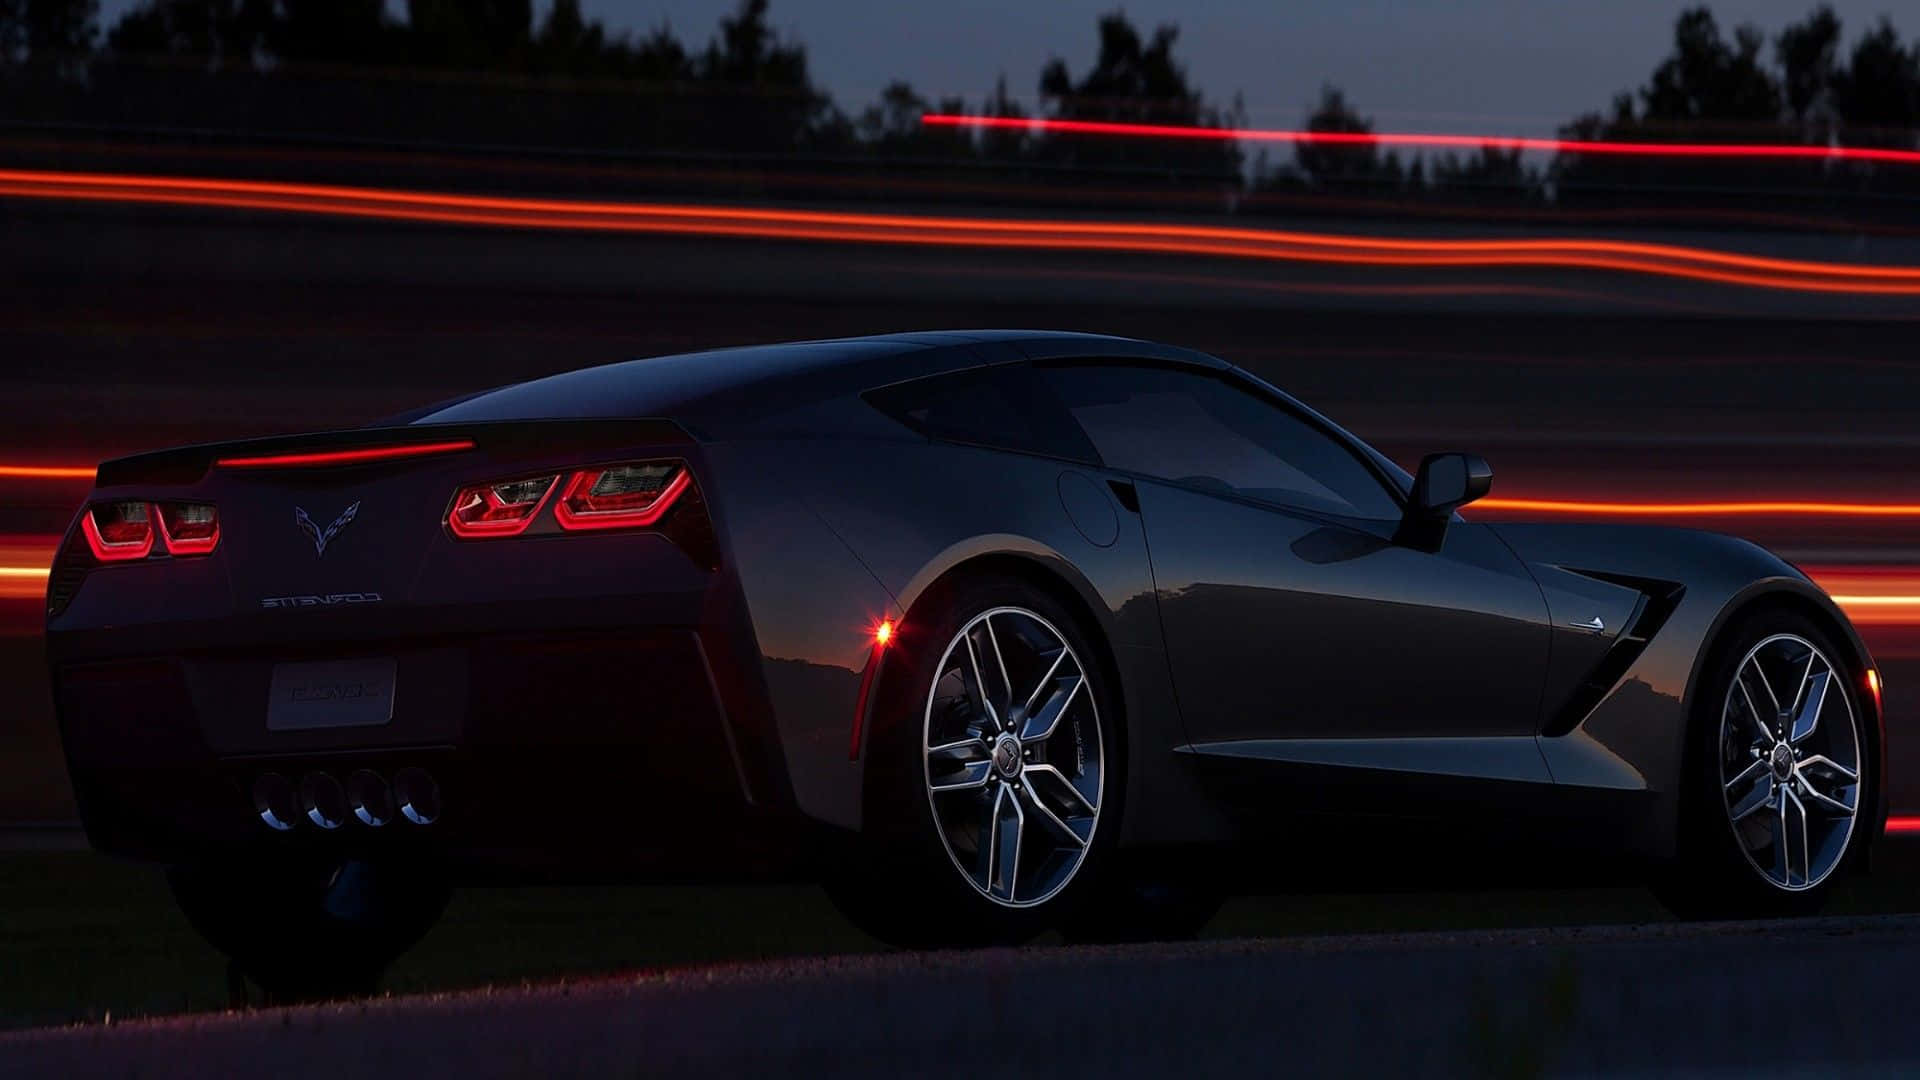 Corvette Pictures  Download Free Images on Unsplash